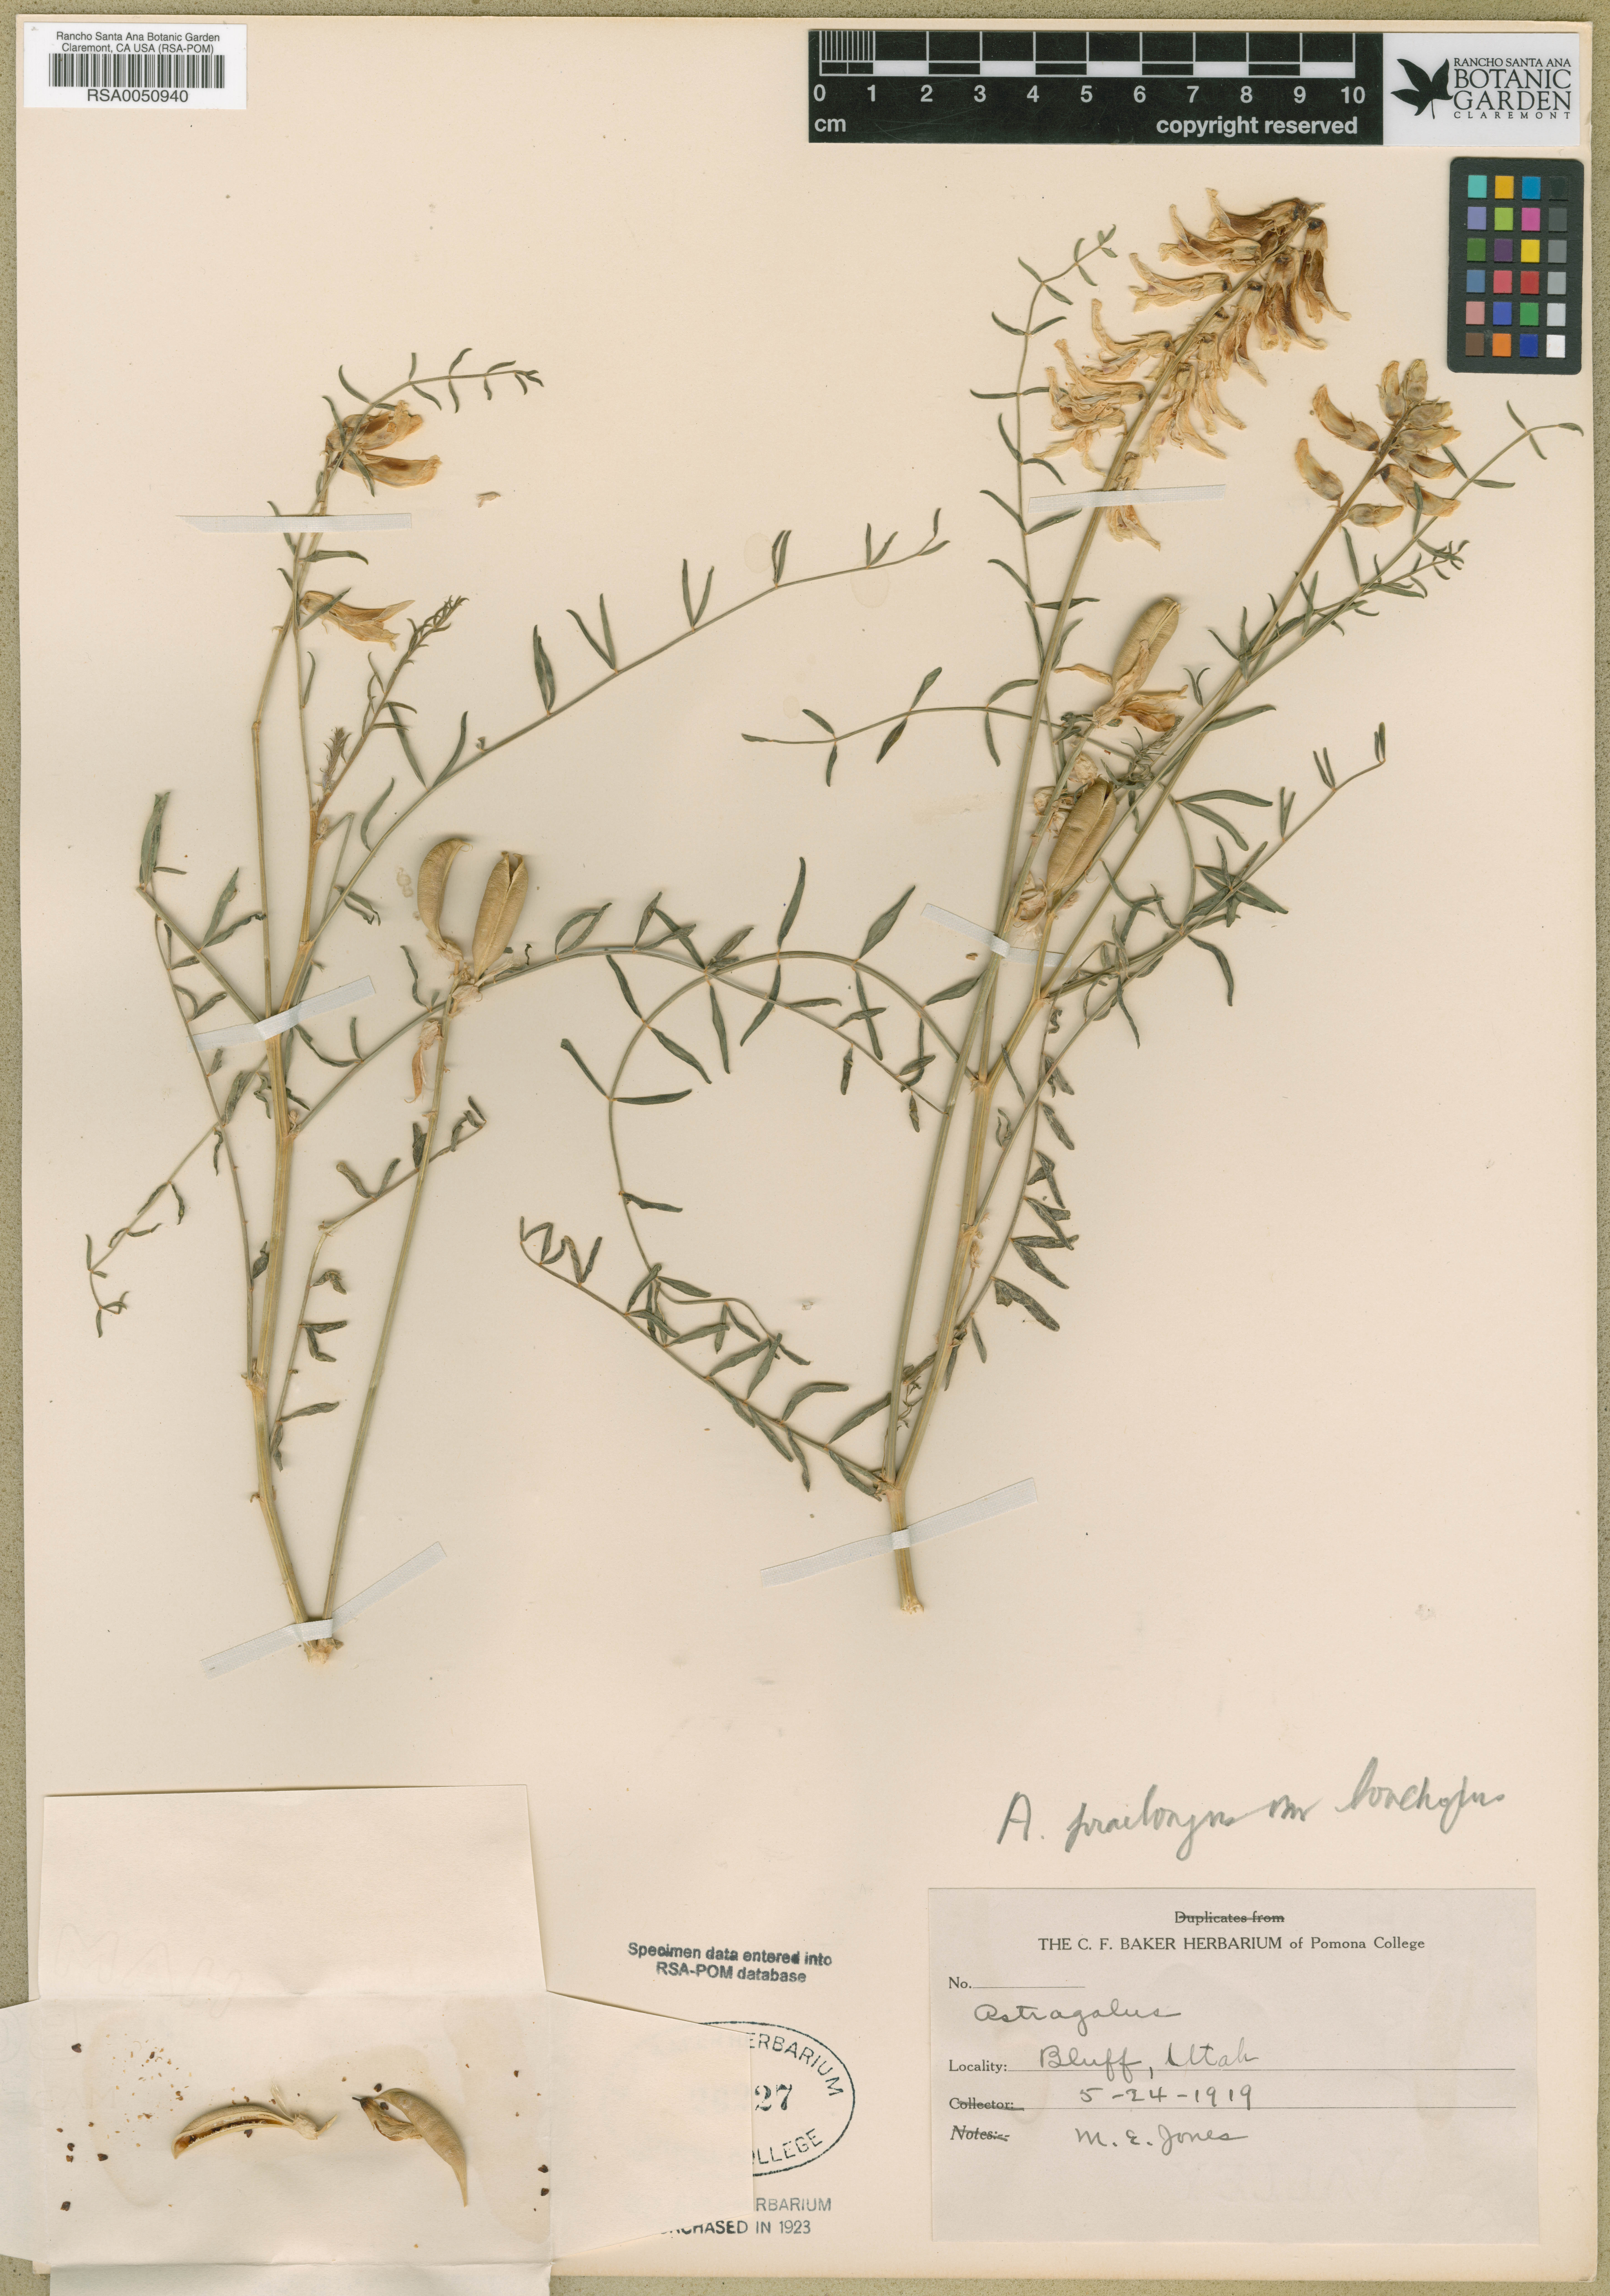 Astragalus praelongus var. lonchopus image